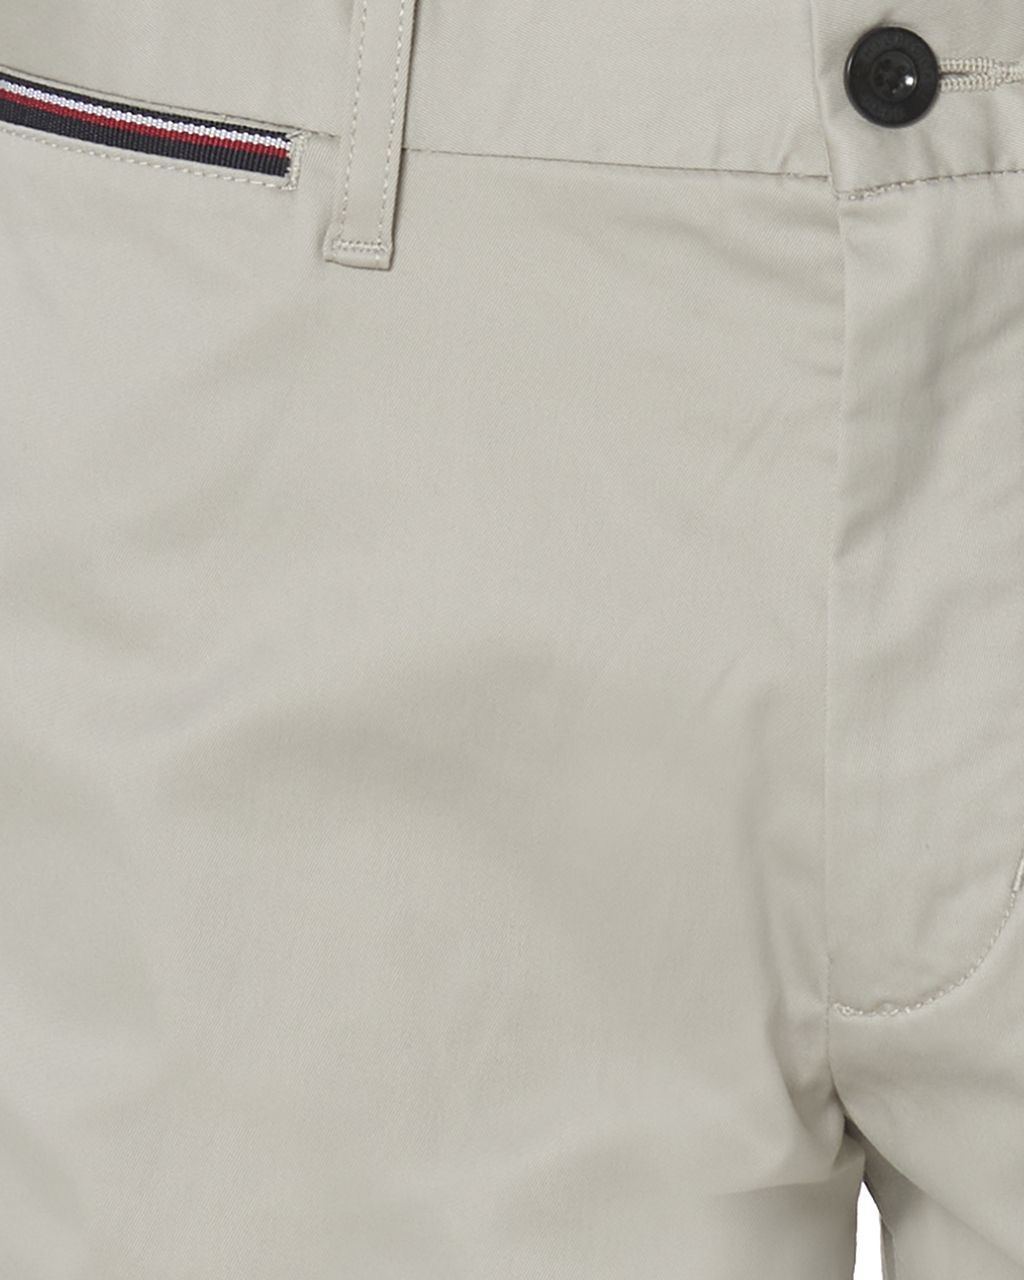 Tommy Hilfiger Menswear Short Sand 069955-001-31